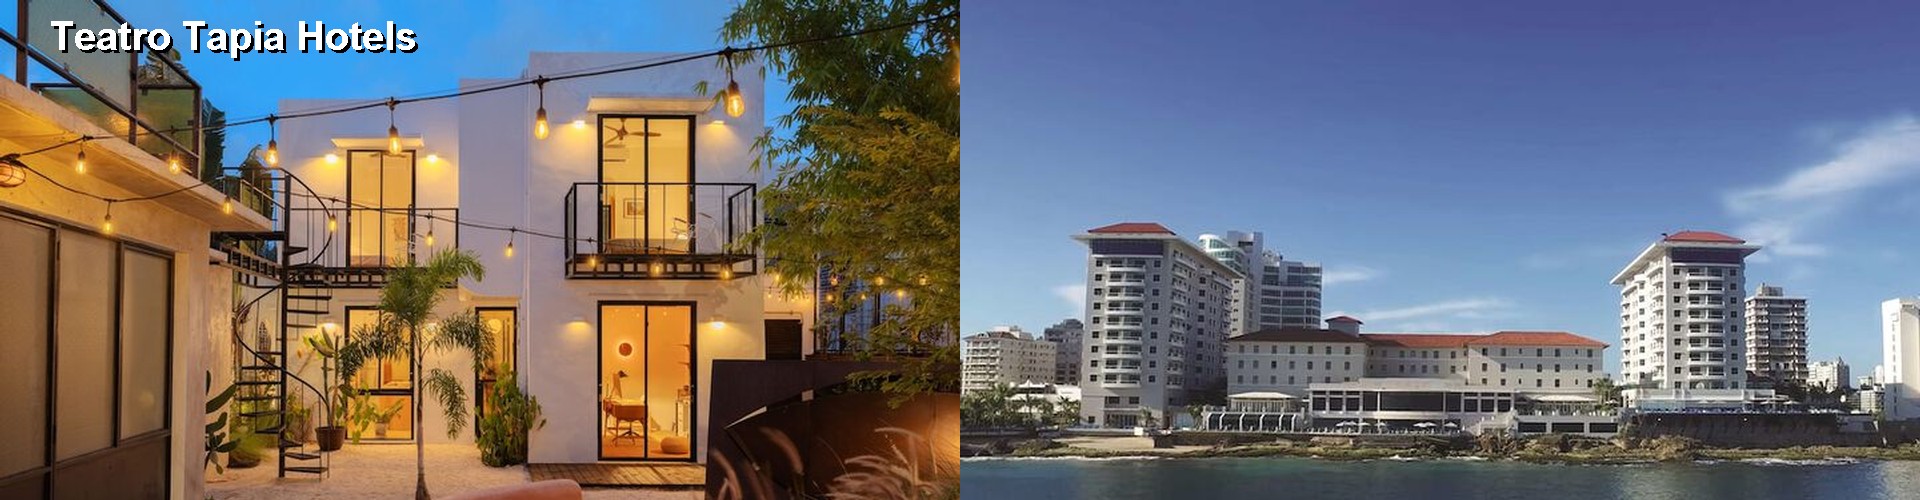 5 Best Hotels near Teatro Tapia